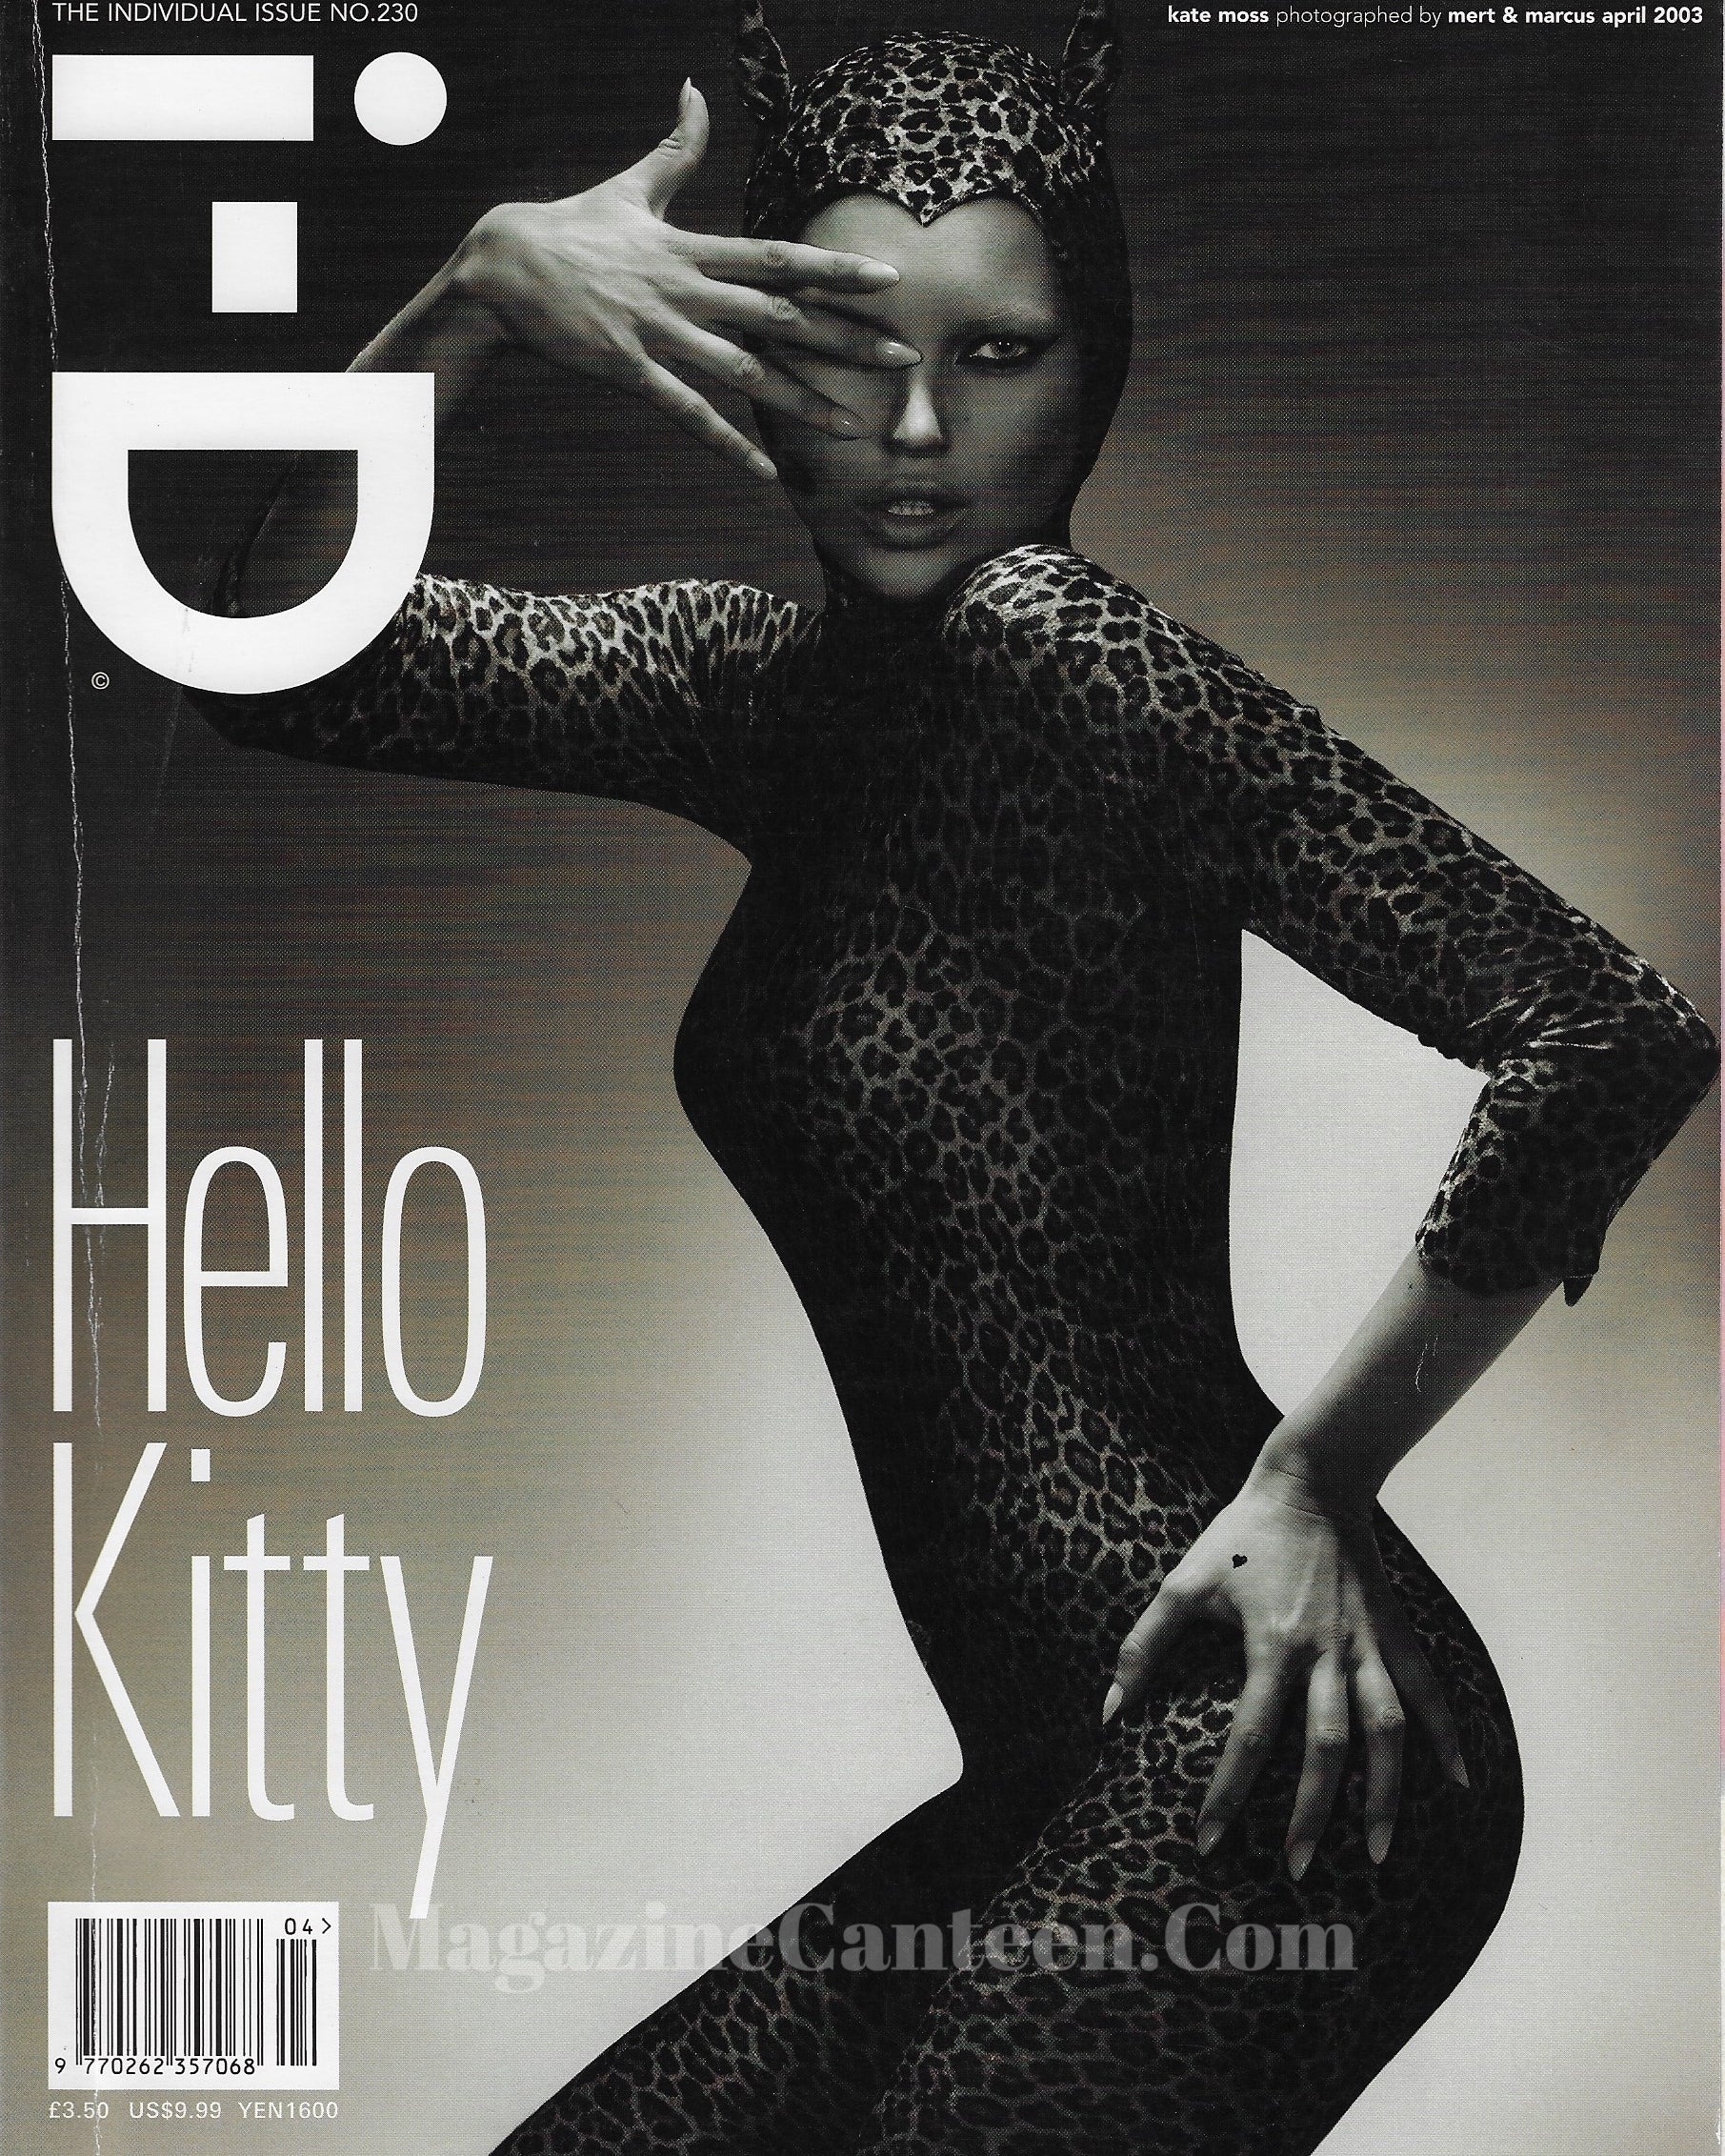 I-D Magazine 230 - Kate Moss 2003